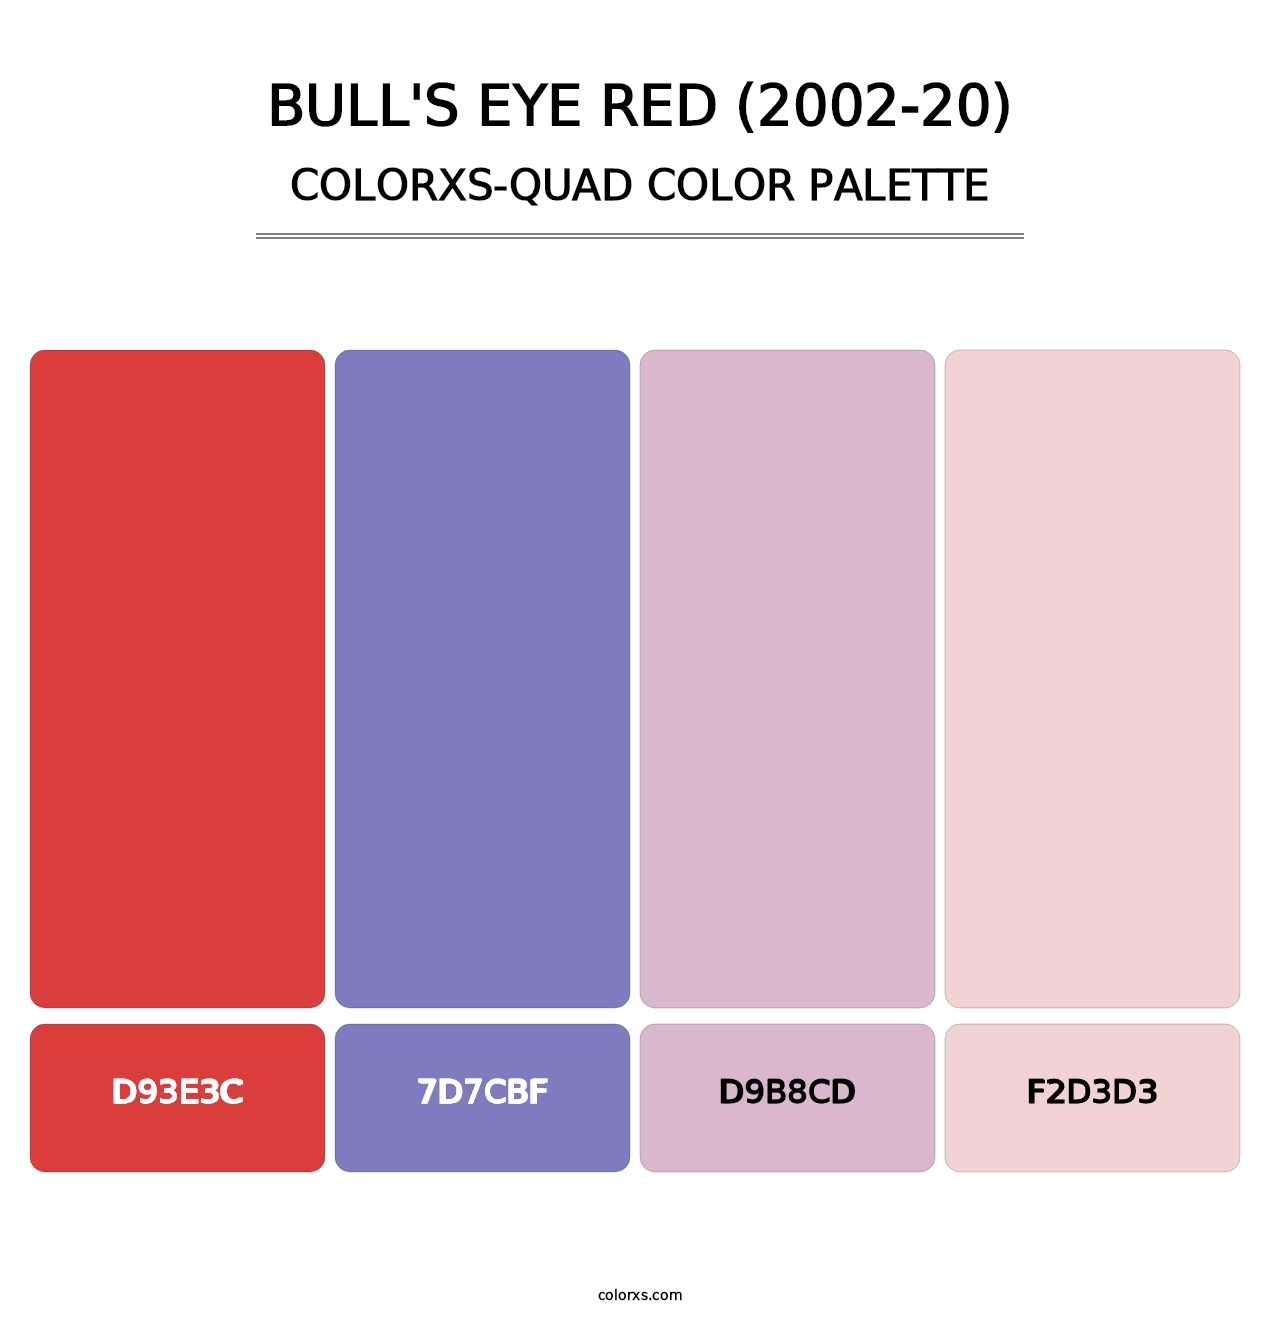 Bull's Eye Red (2002-20) - Colorxs Quad Palette